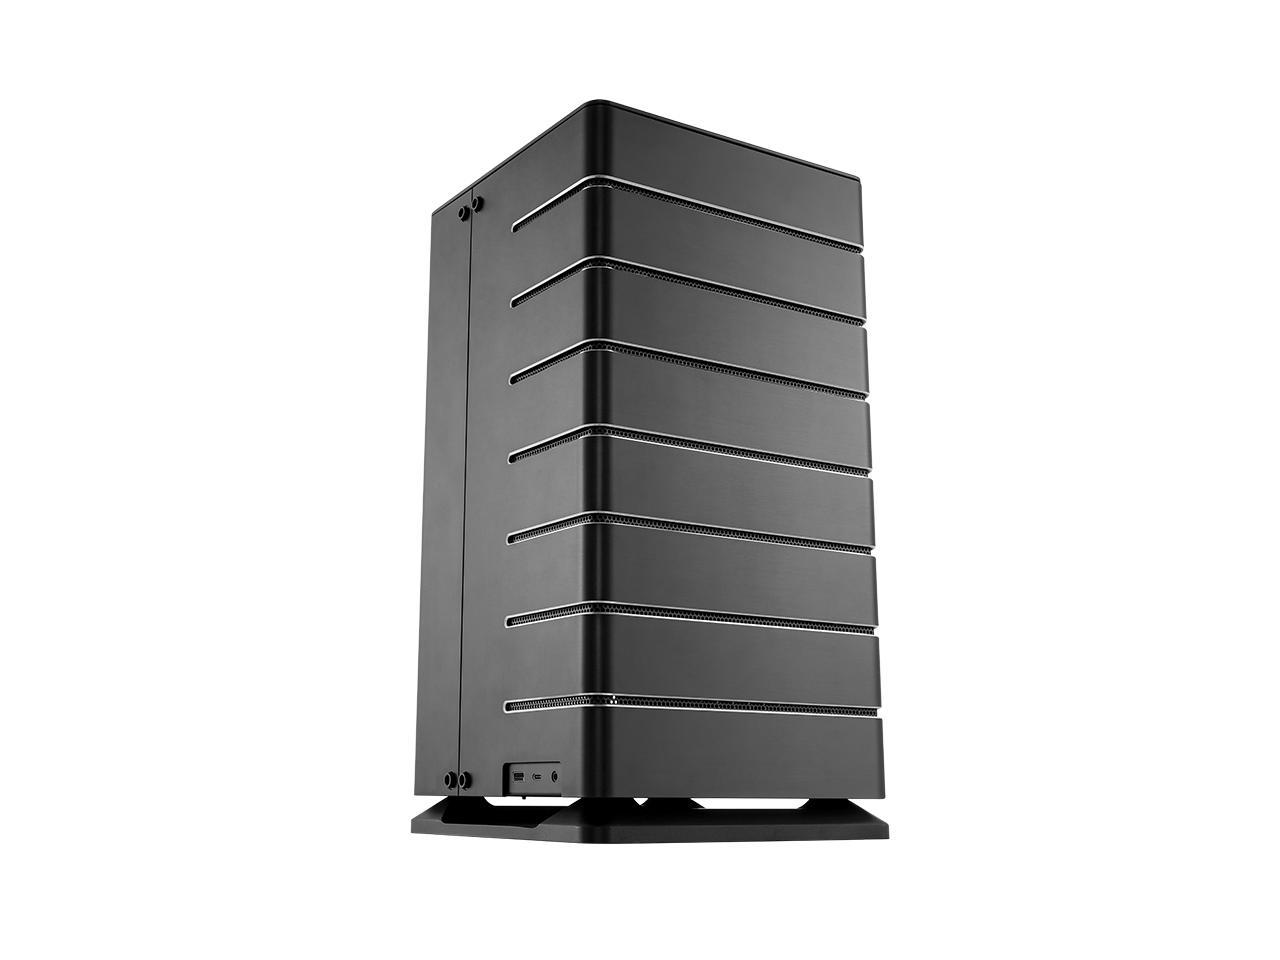 ABEE AS Enclosure RS07 BLACK Mini-ITX Aluminum Computer 